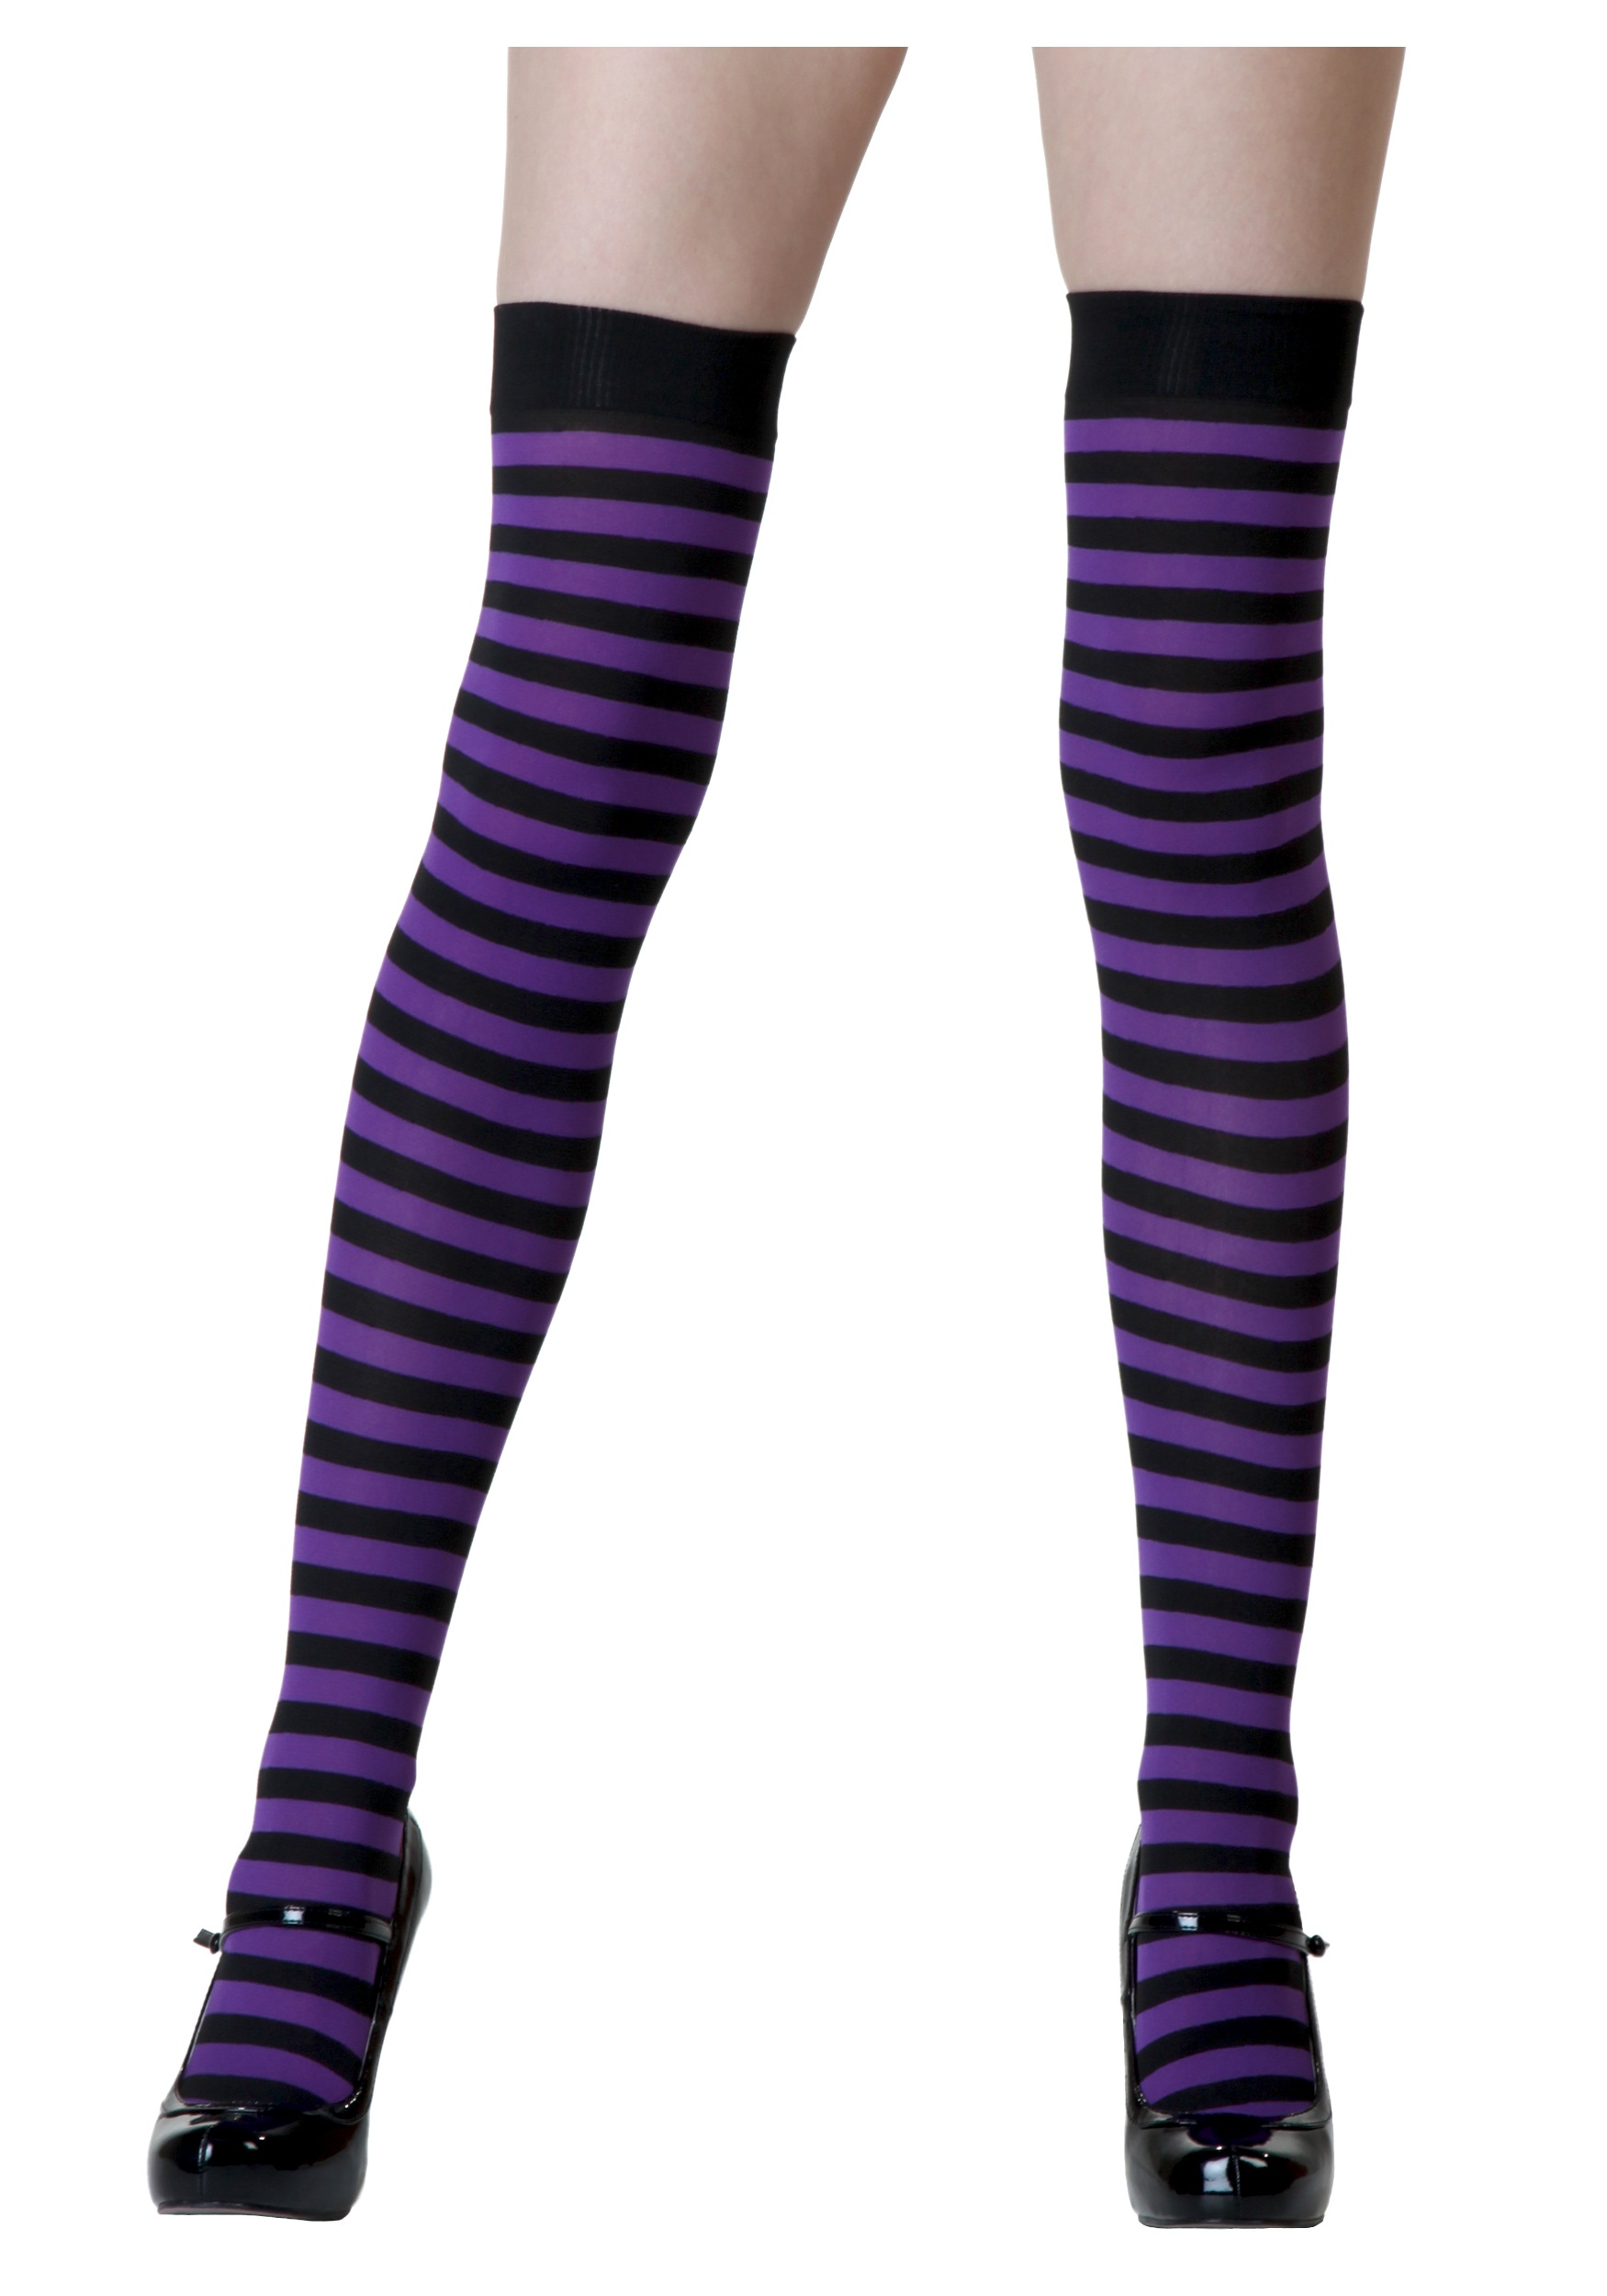 https://images.halloweencostumes.ca/products/13693/1-1/black-purple-striped-stockings.jpg